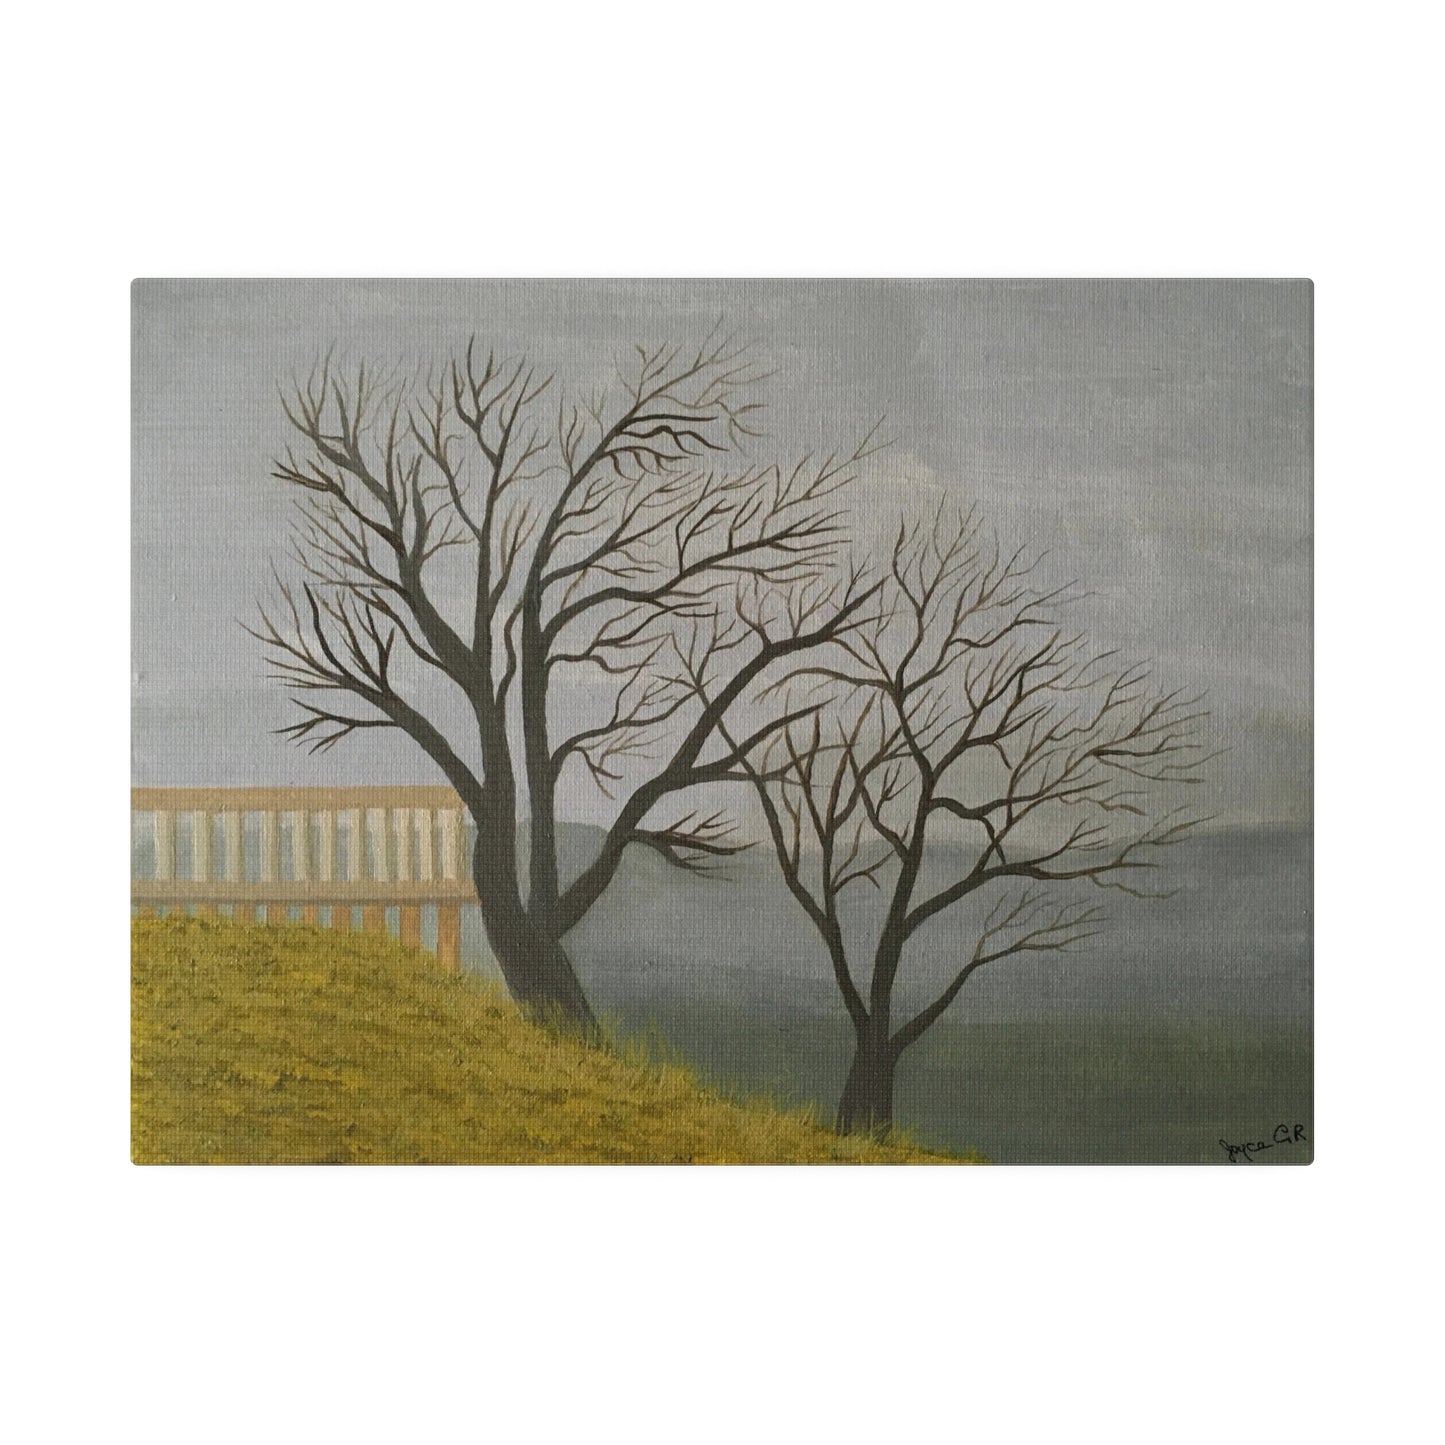 Receding Fog.  Painting Print on canvas.